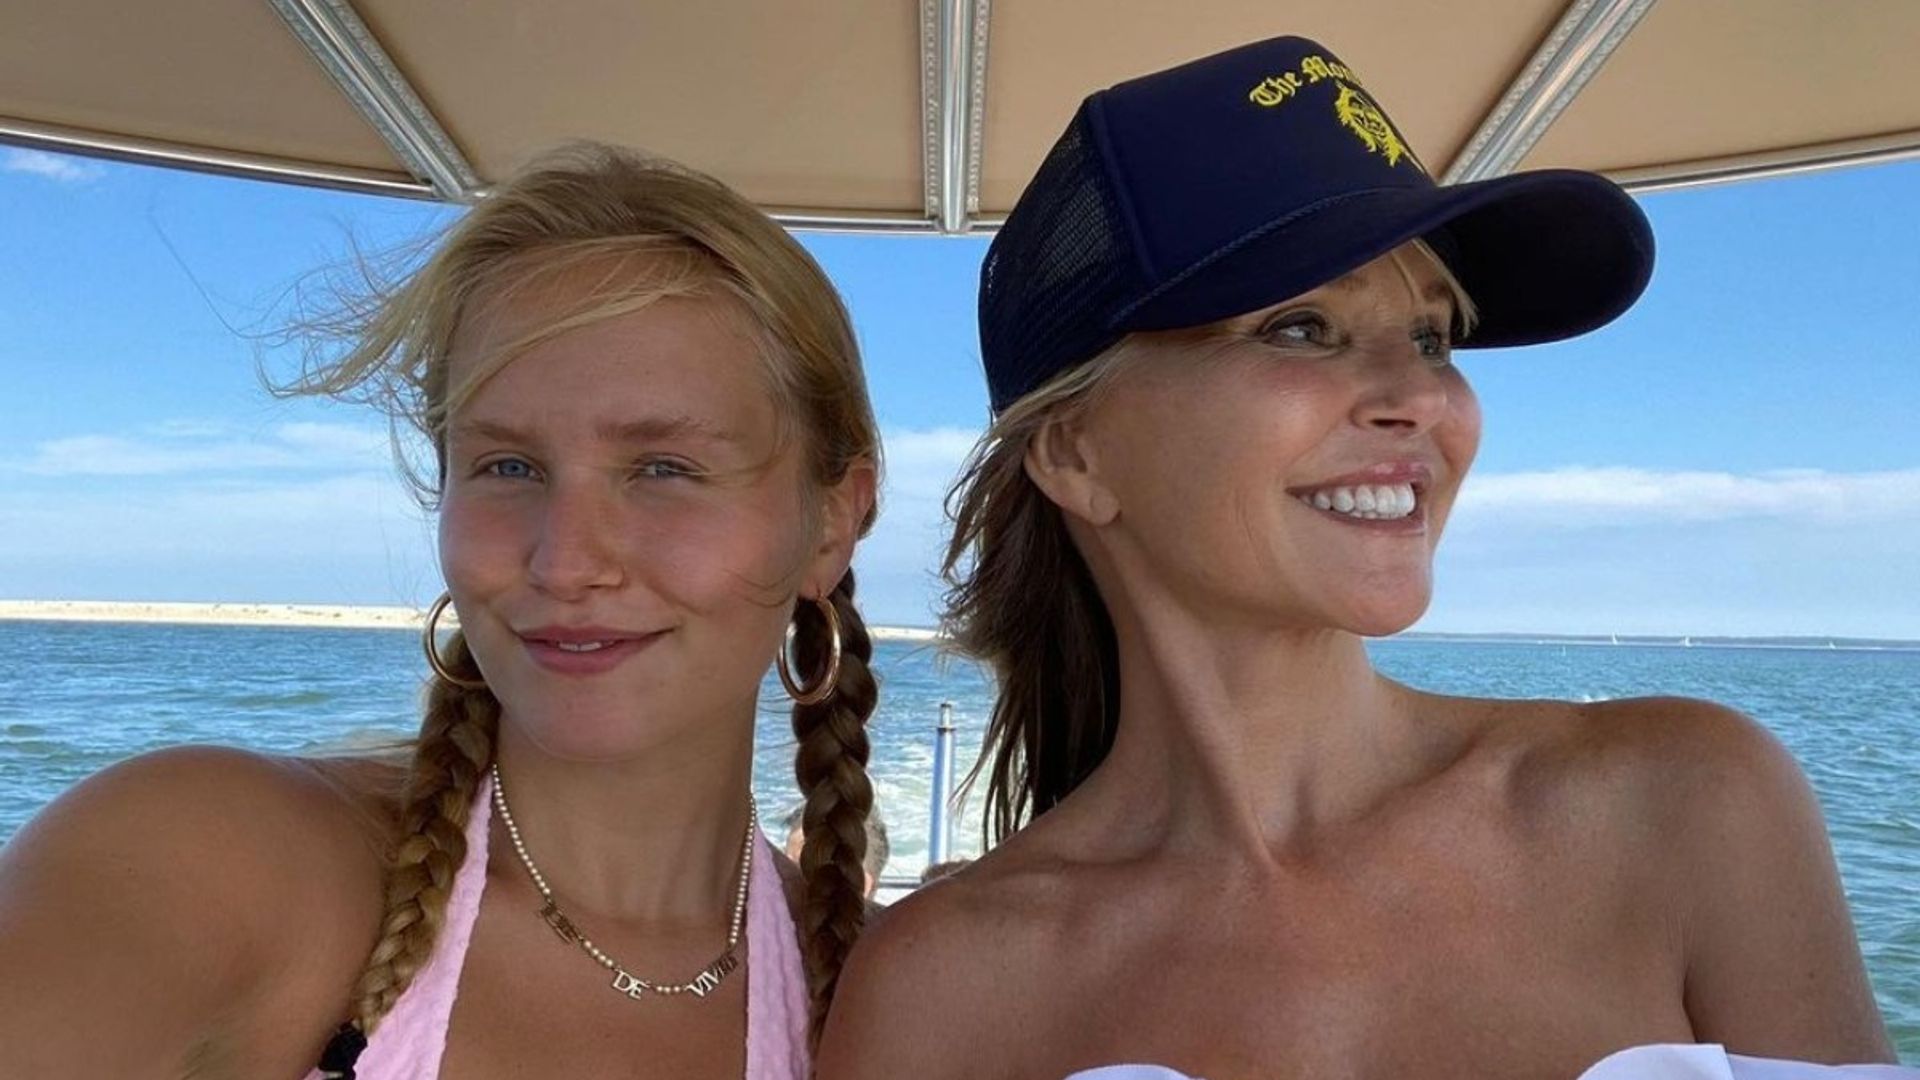 Christie Brinkley's daughters react to her beautiful bridal-inspired look